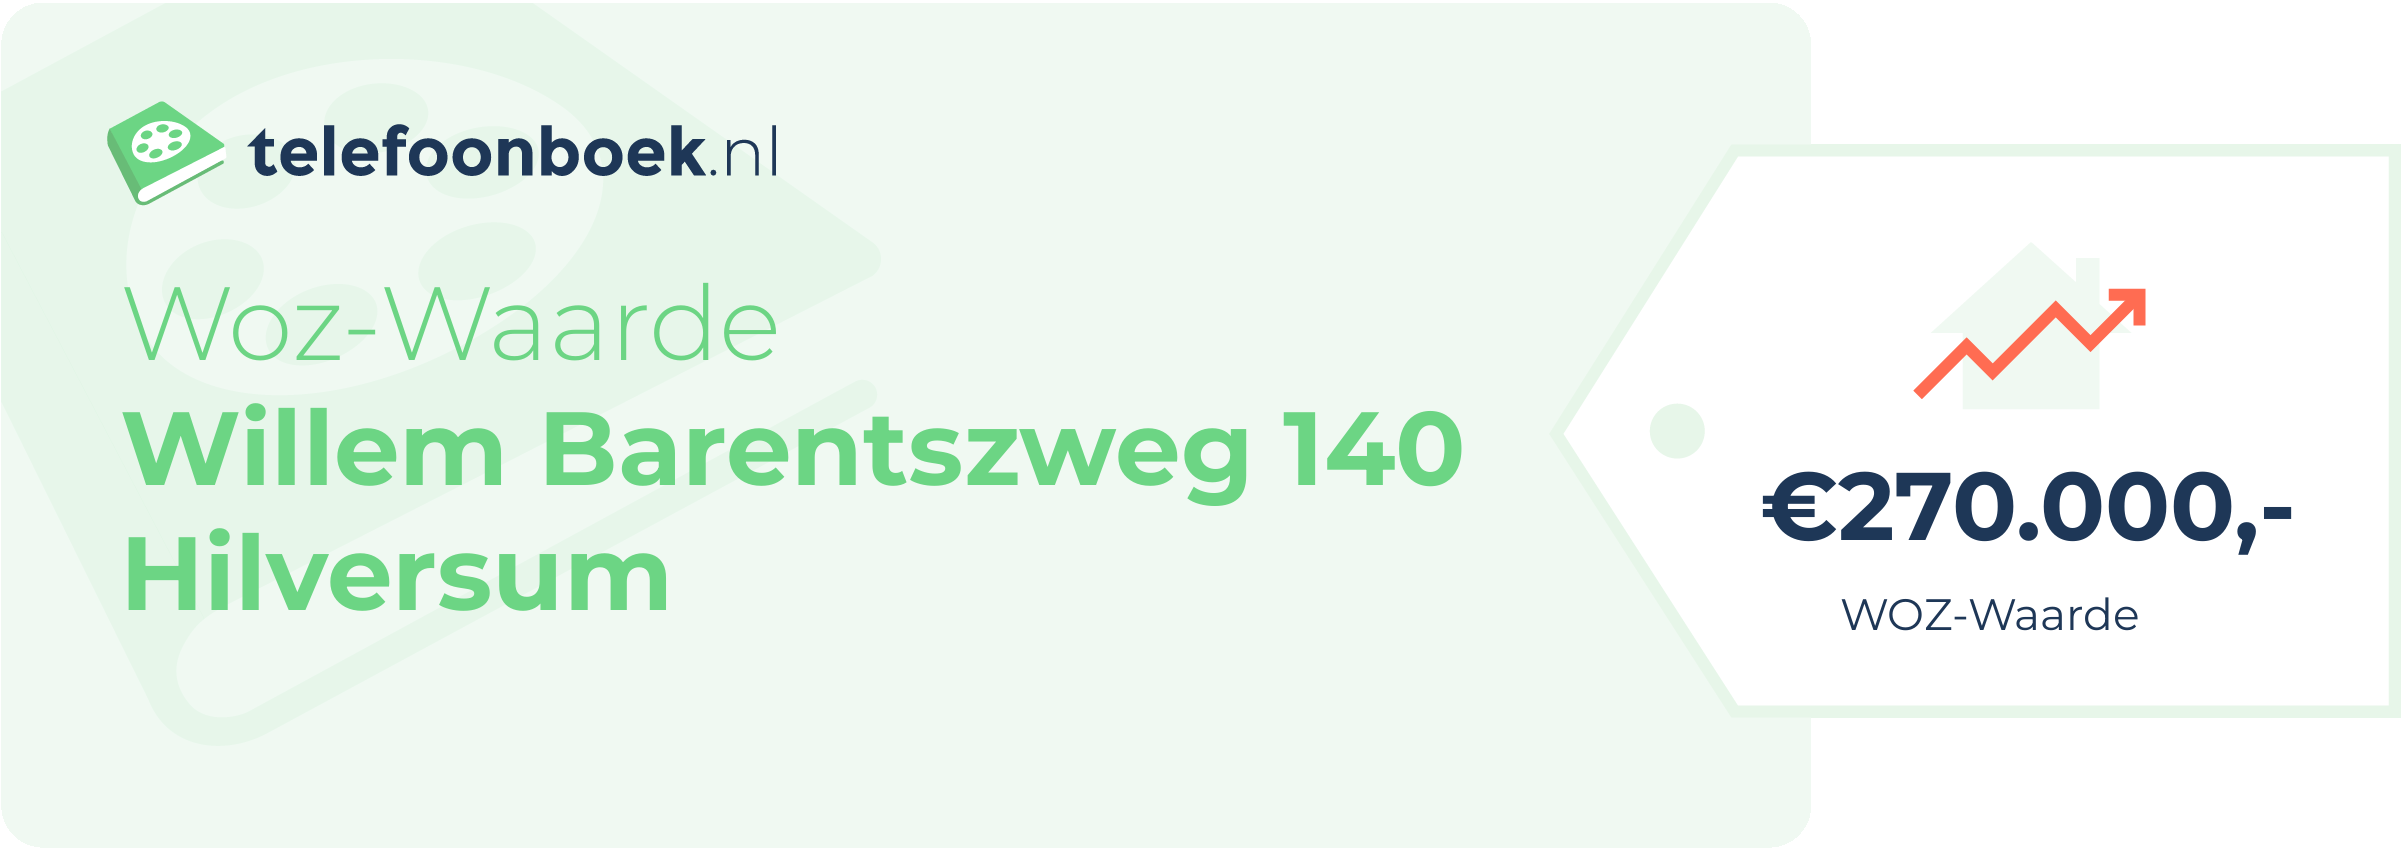 WOZ-waarde Willem Barentszweg 140 Hilversum